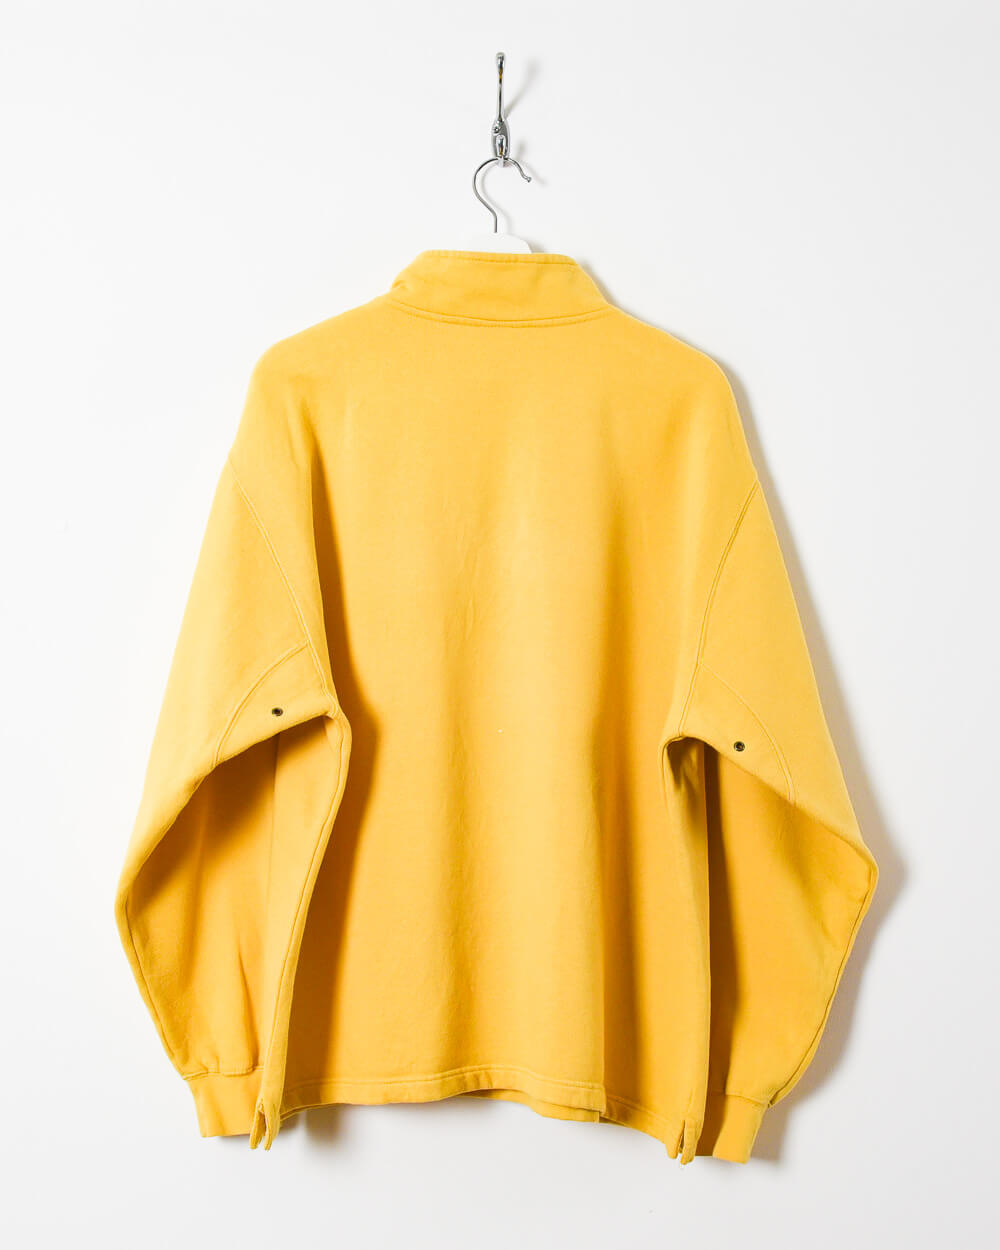 Yellow Timberland 1/4 Zip Sweatshirt - Large